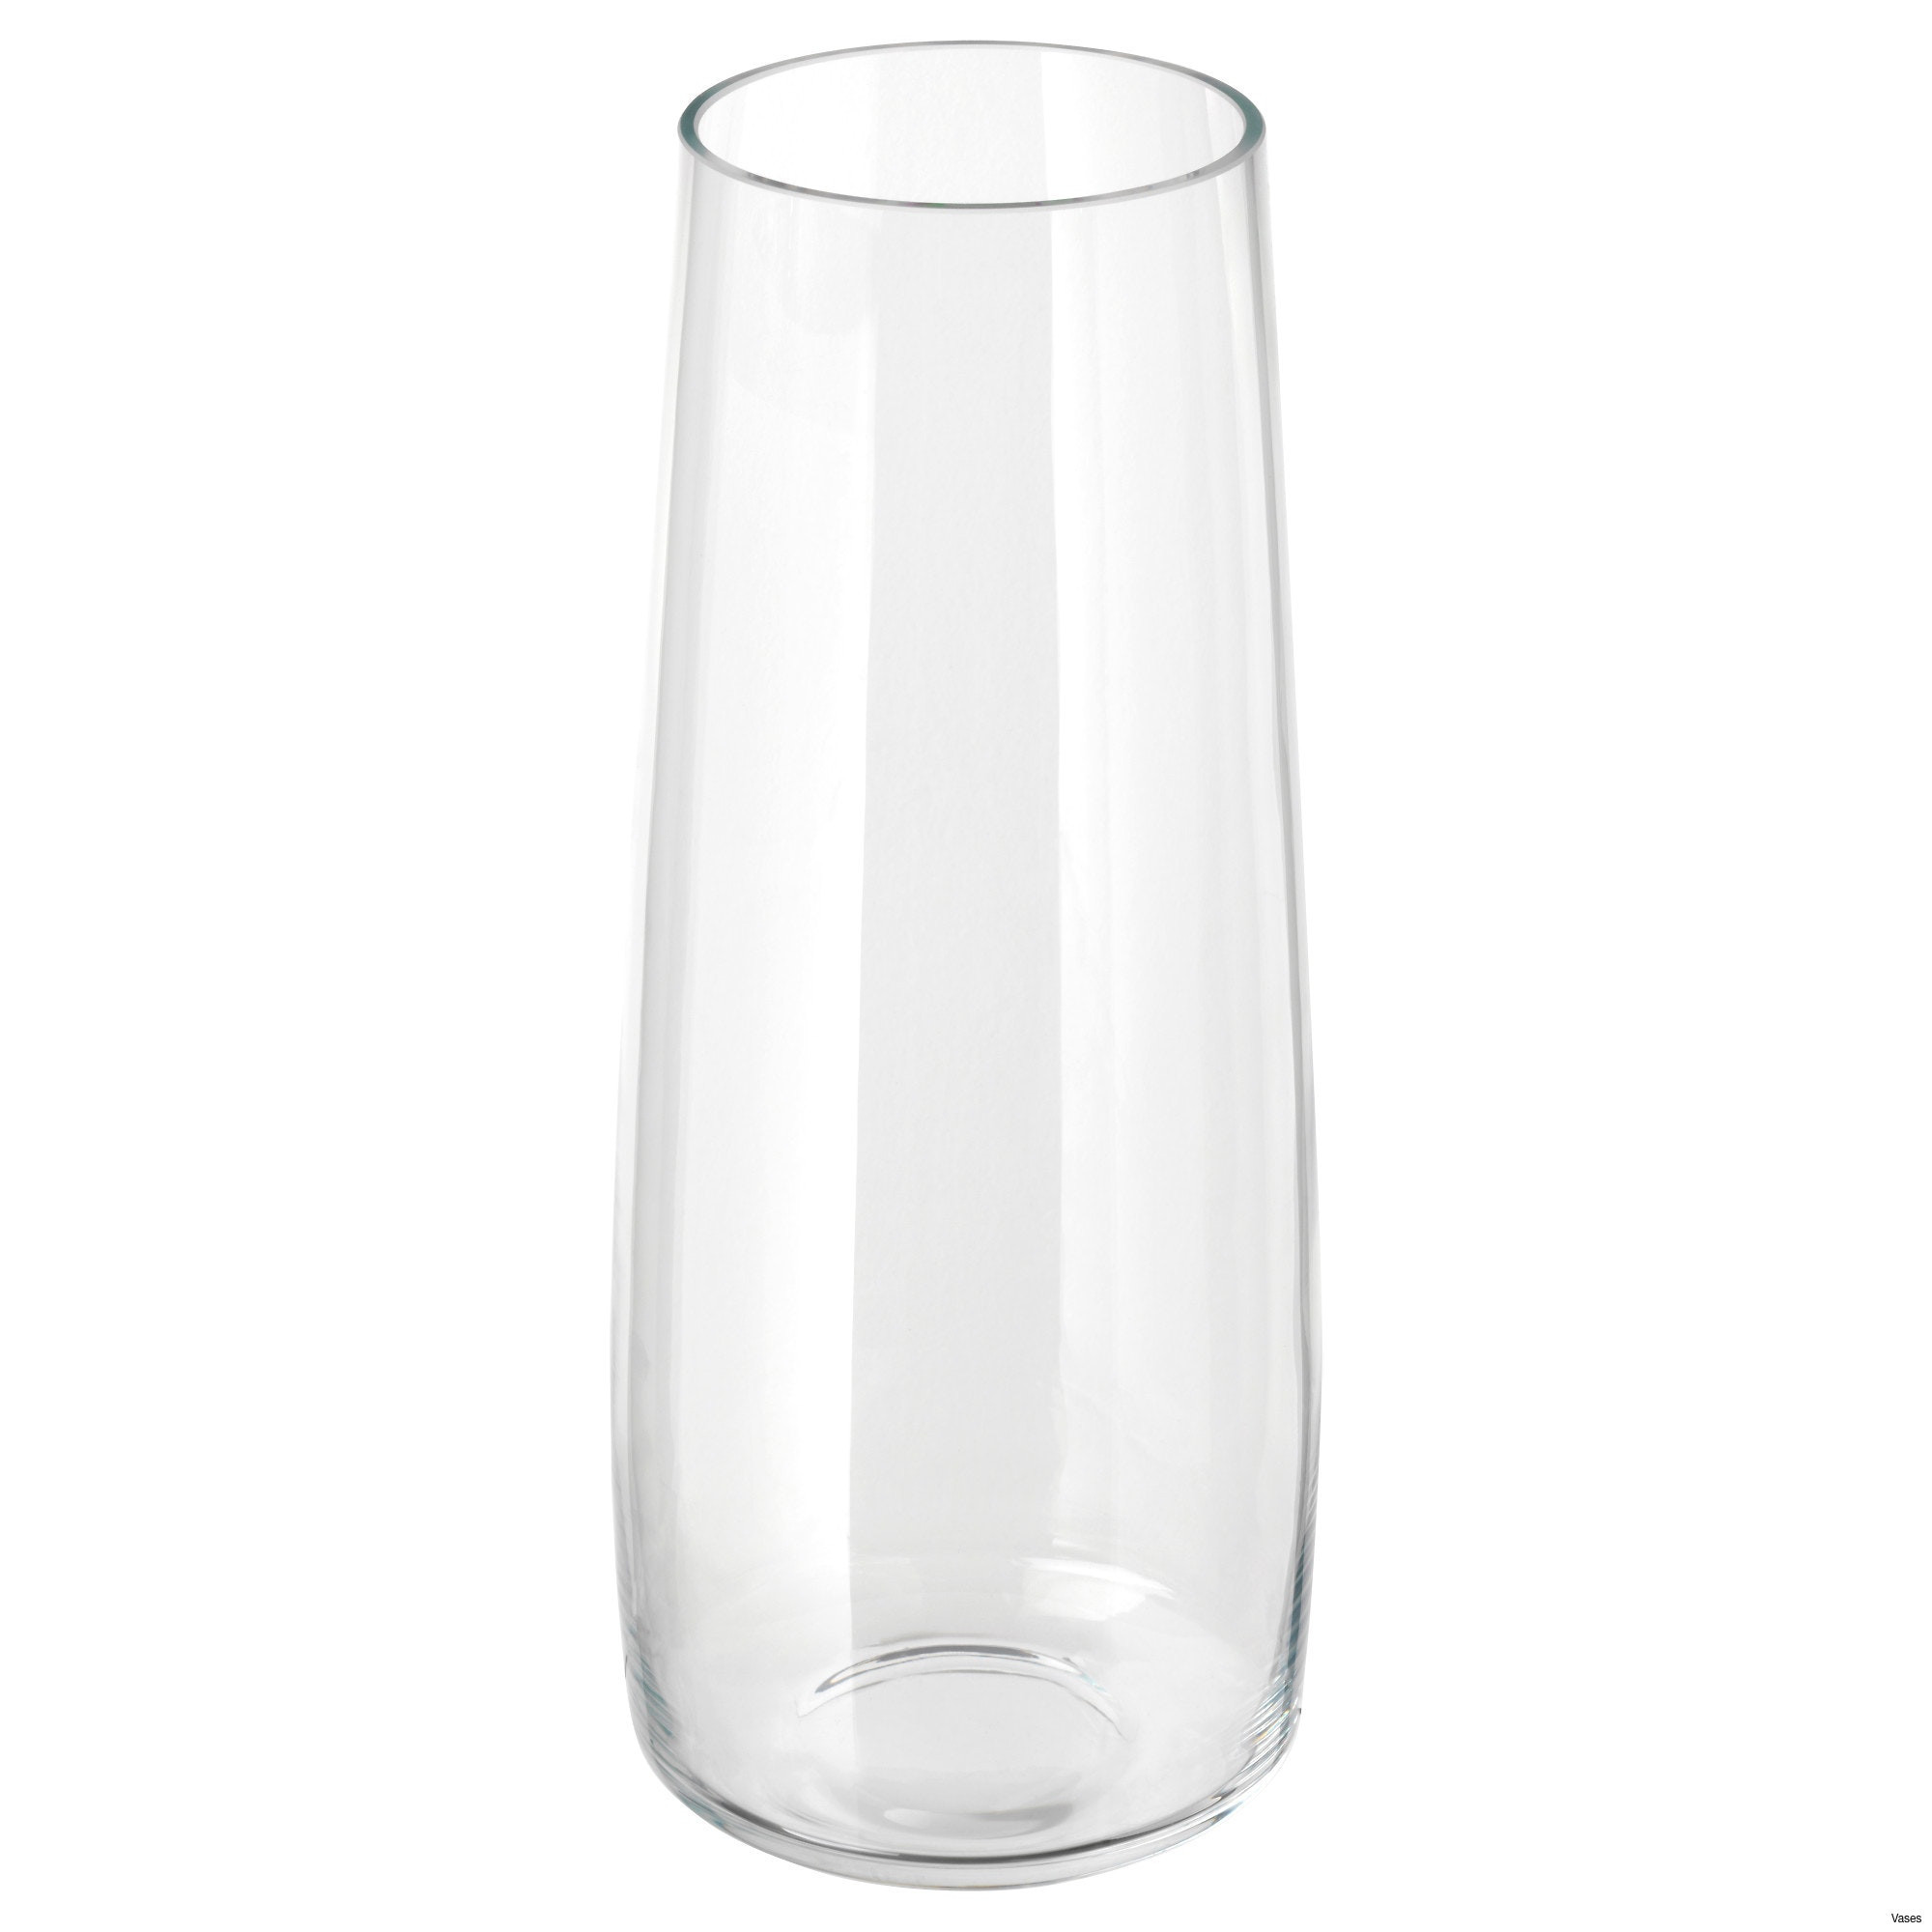 13 Unique Teardrop Glass Vase 2024 free download teardrop glass vase of glass globe vase image clear glass planters fresh clear glass vases with clear glass planters fresh clear glass vases